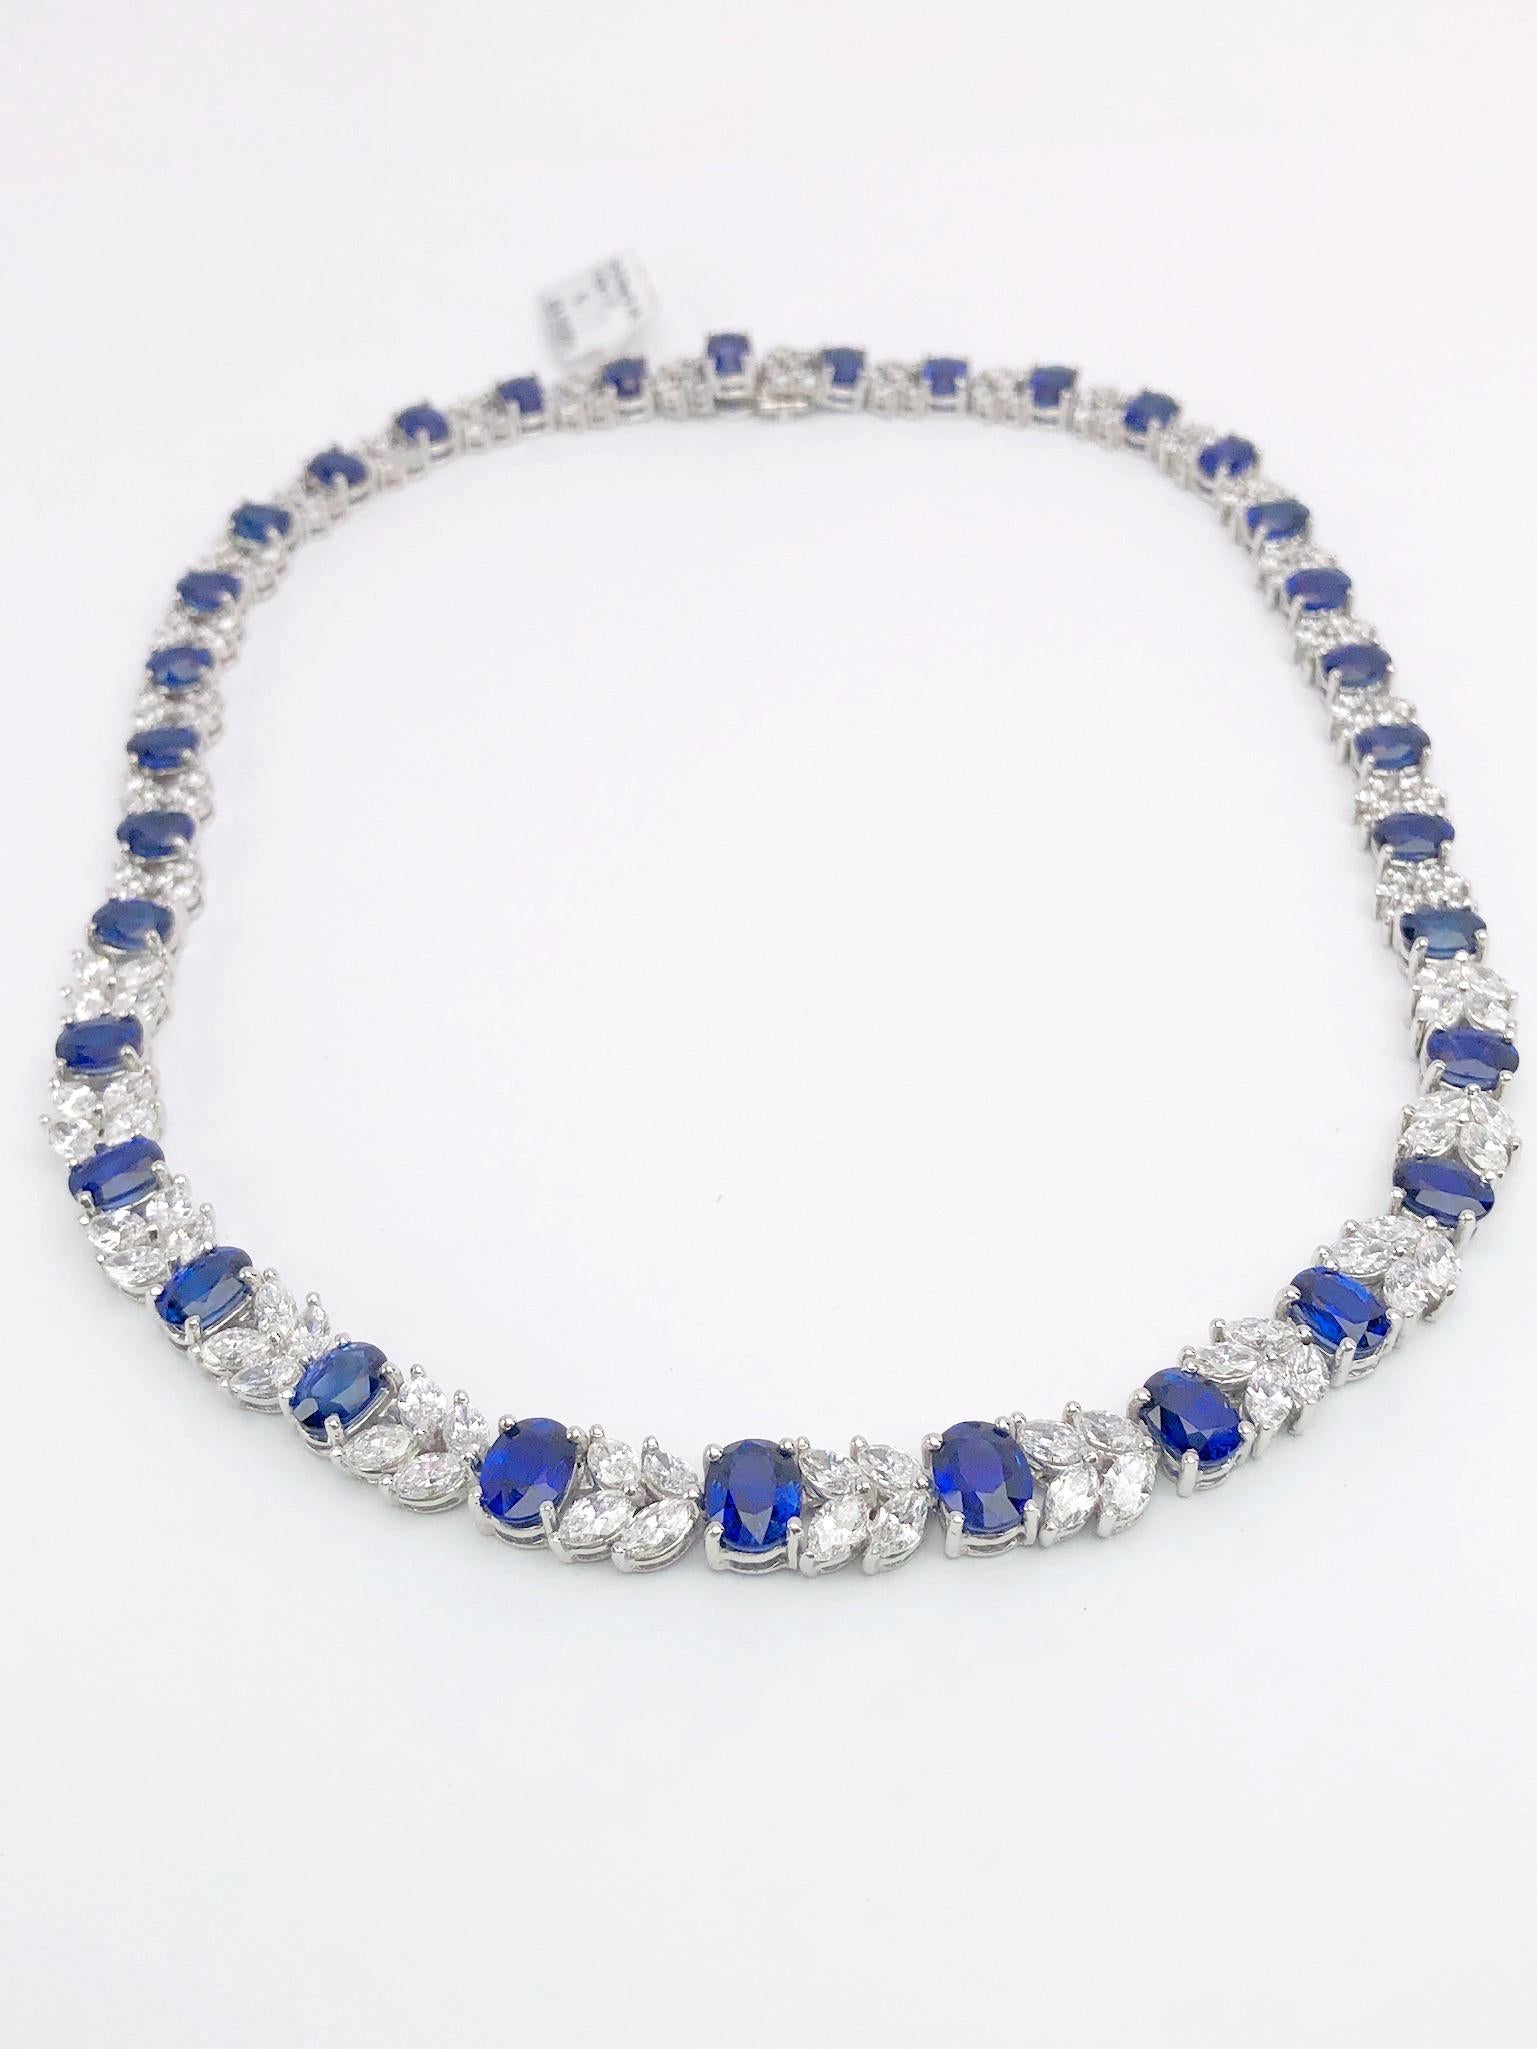 Platinum Necklace 33.70 Carat Oval Blue Sapphires and 13.22 Carat Diamonds 5